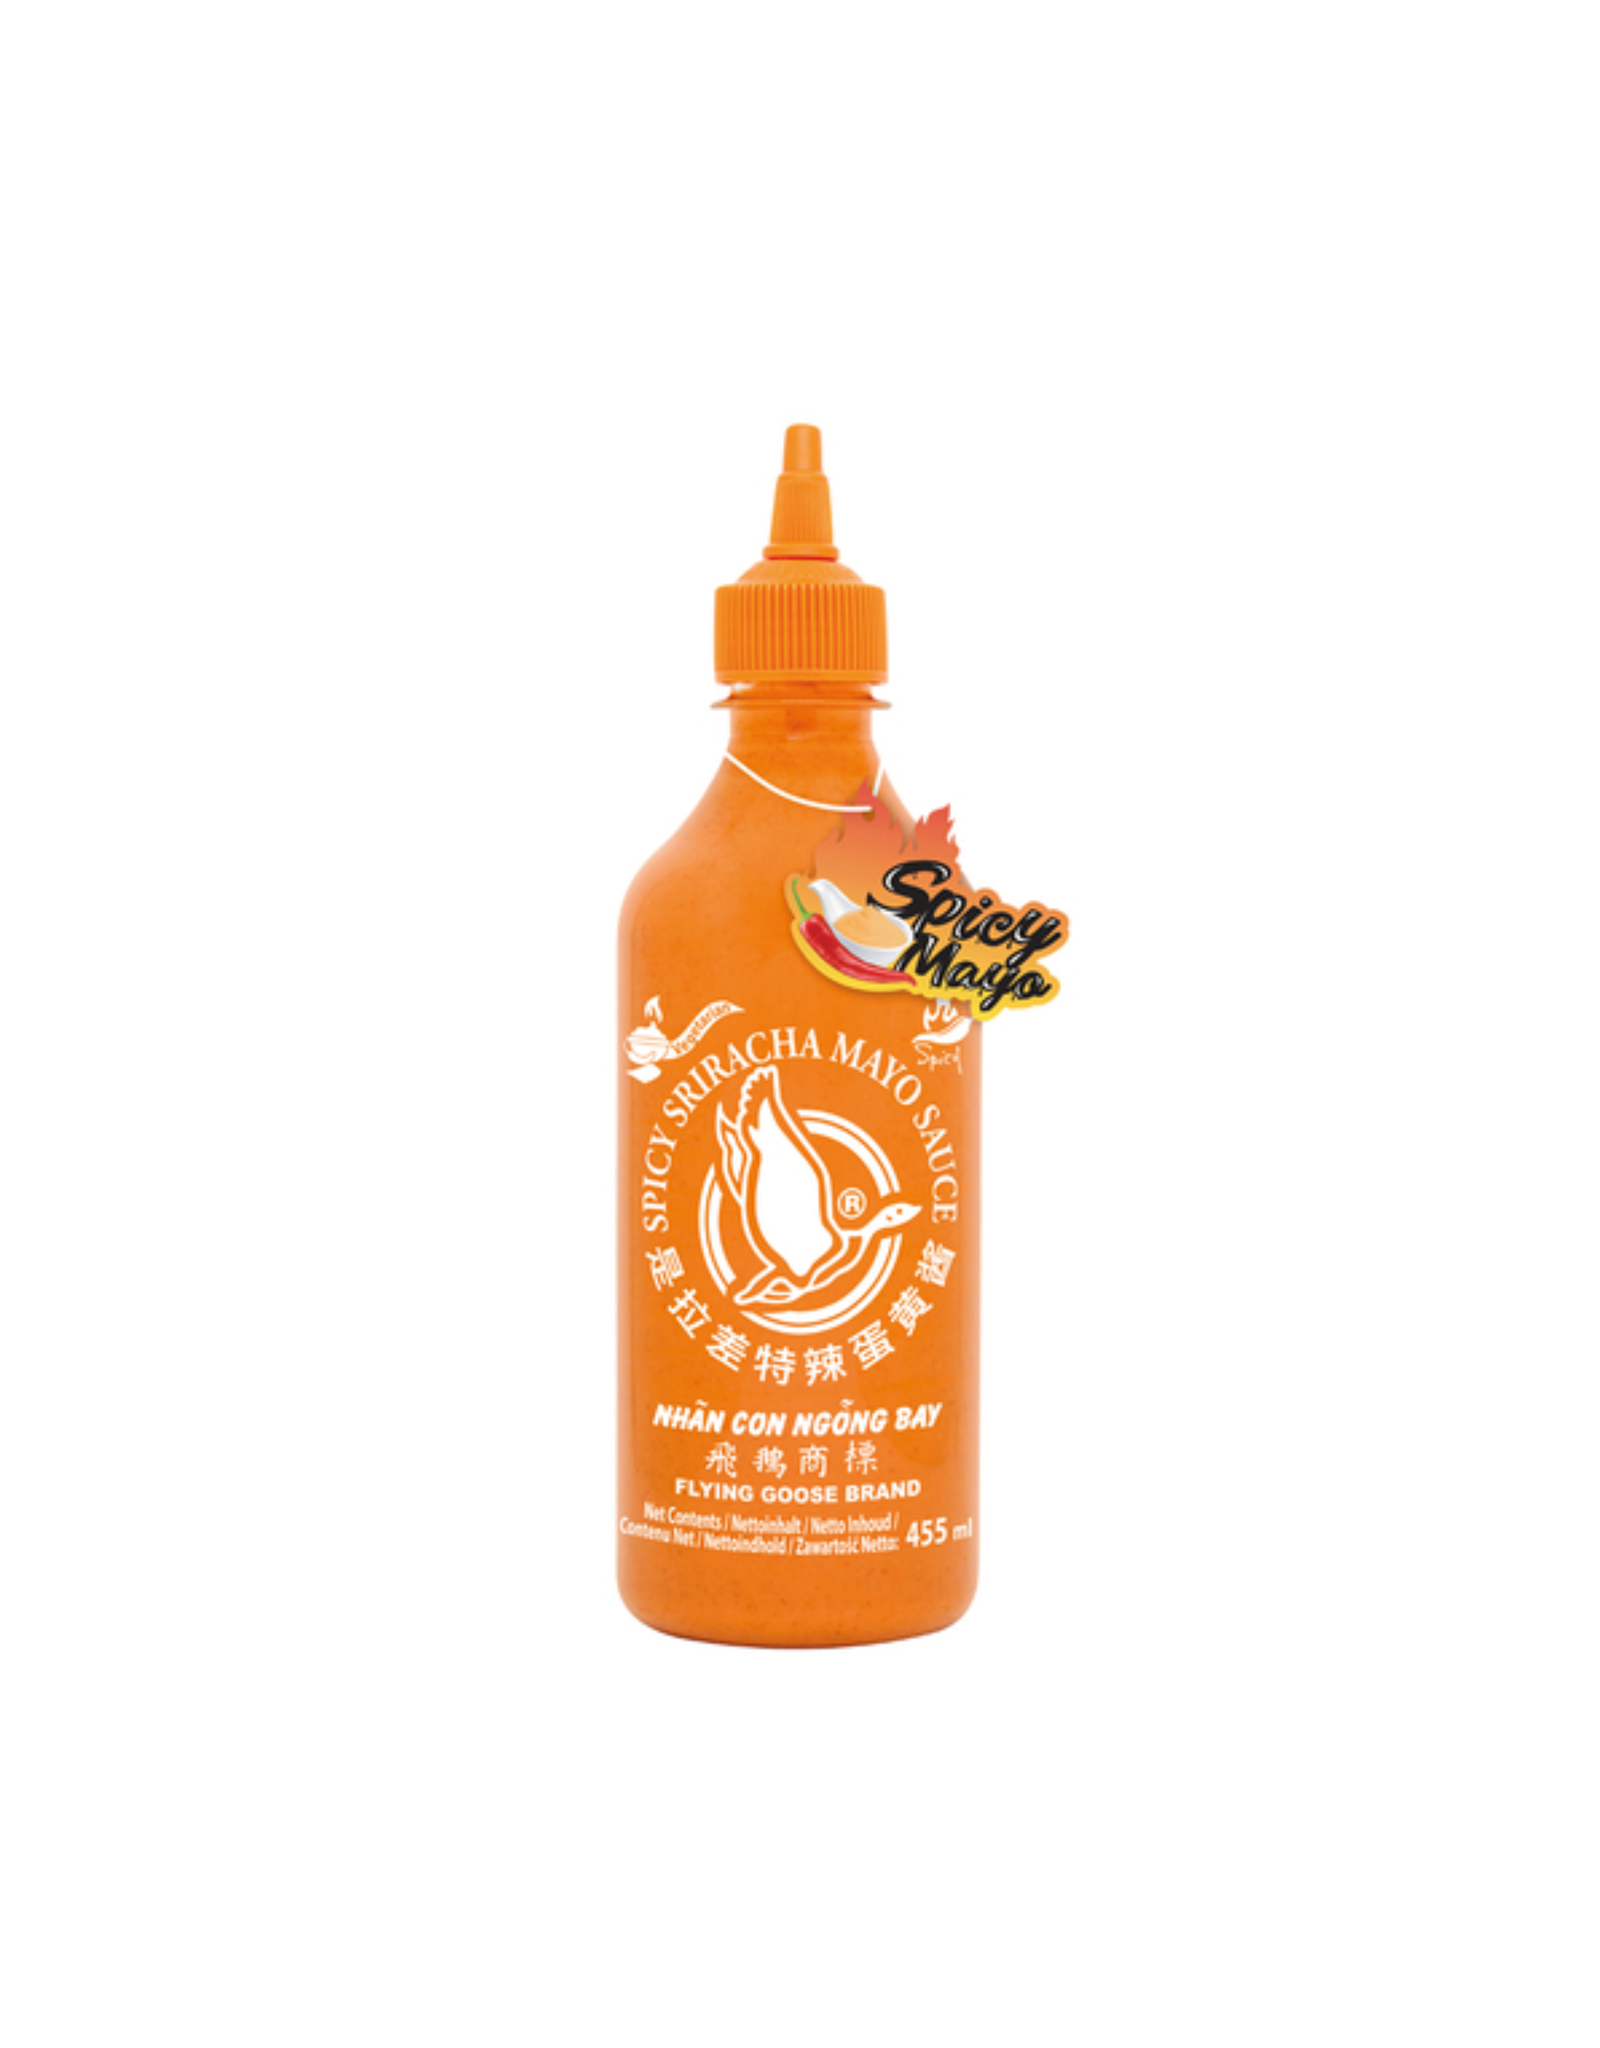 Flying Goose Brand Sriracha Spicy Mayonaise sauce